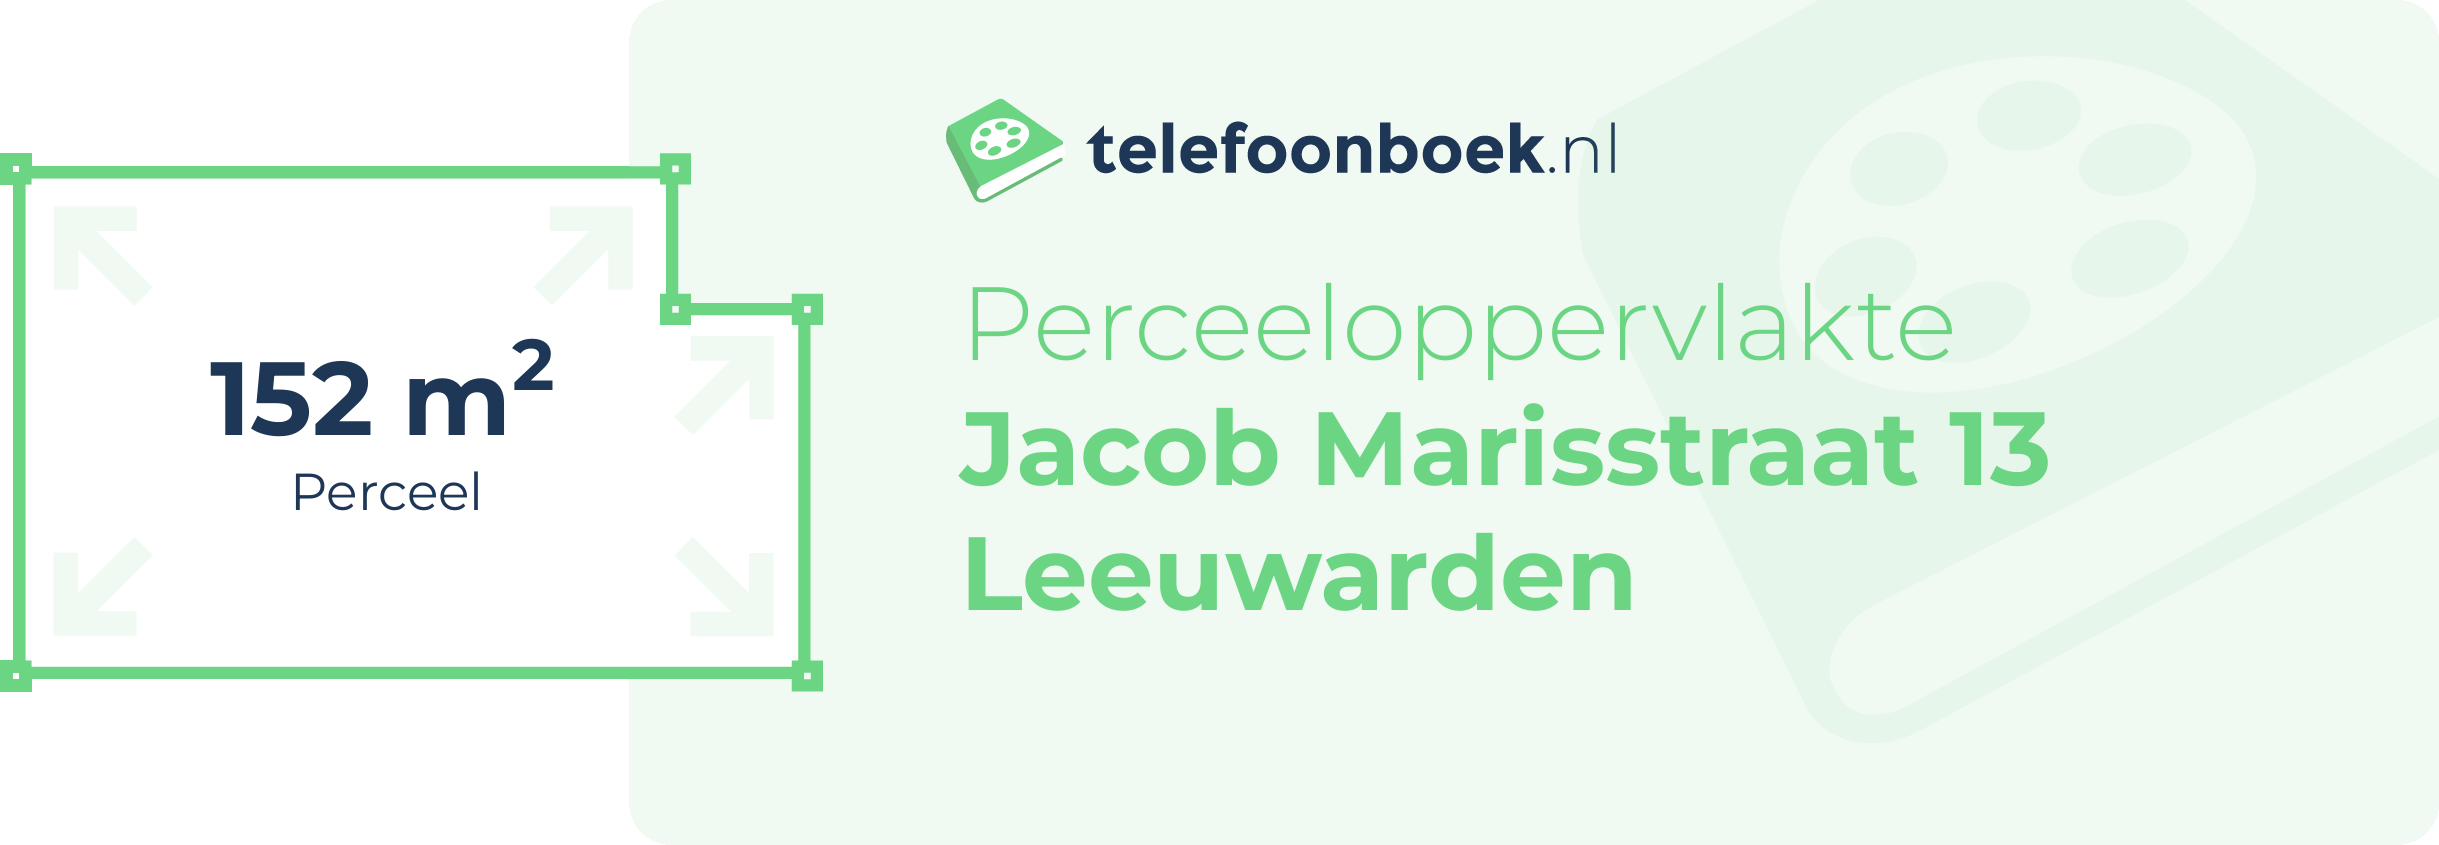 Perceeloppervlakte Jacob Marisstraat 13 Leeuwarden